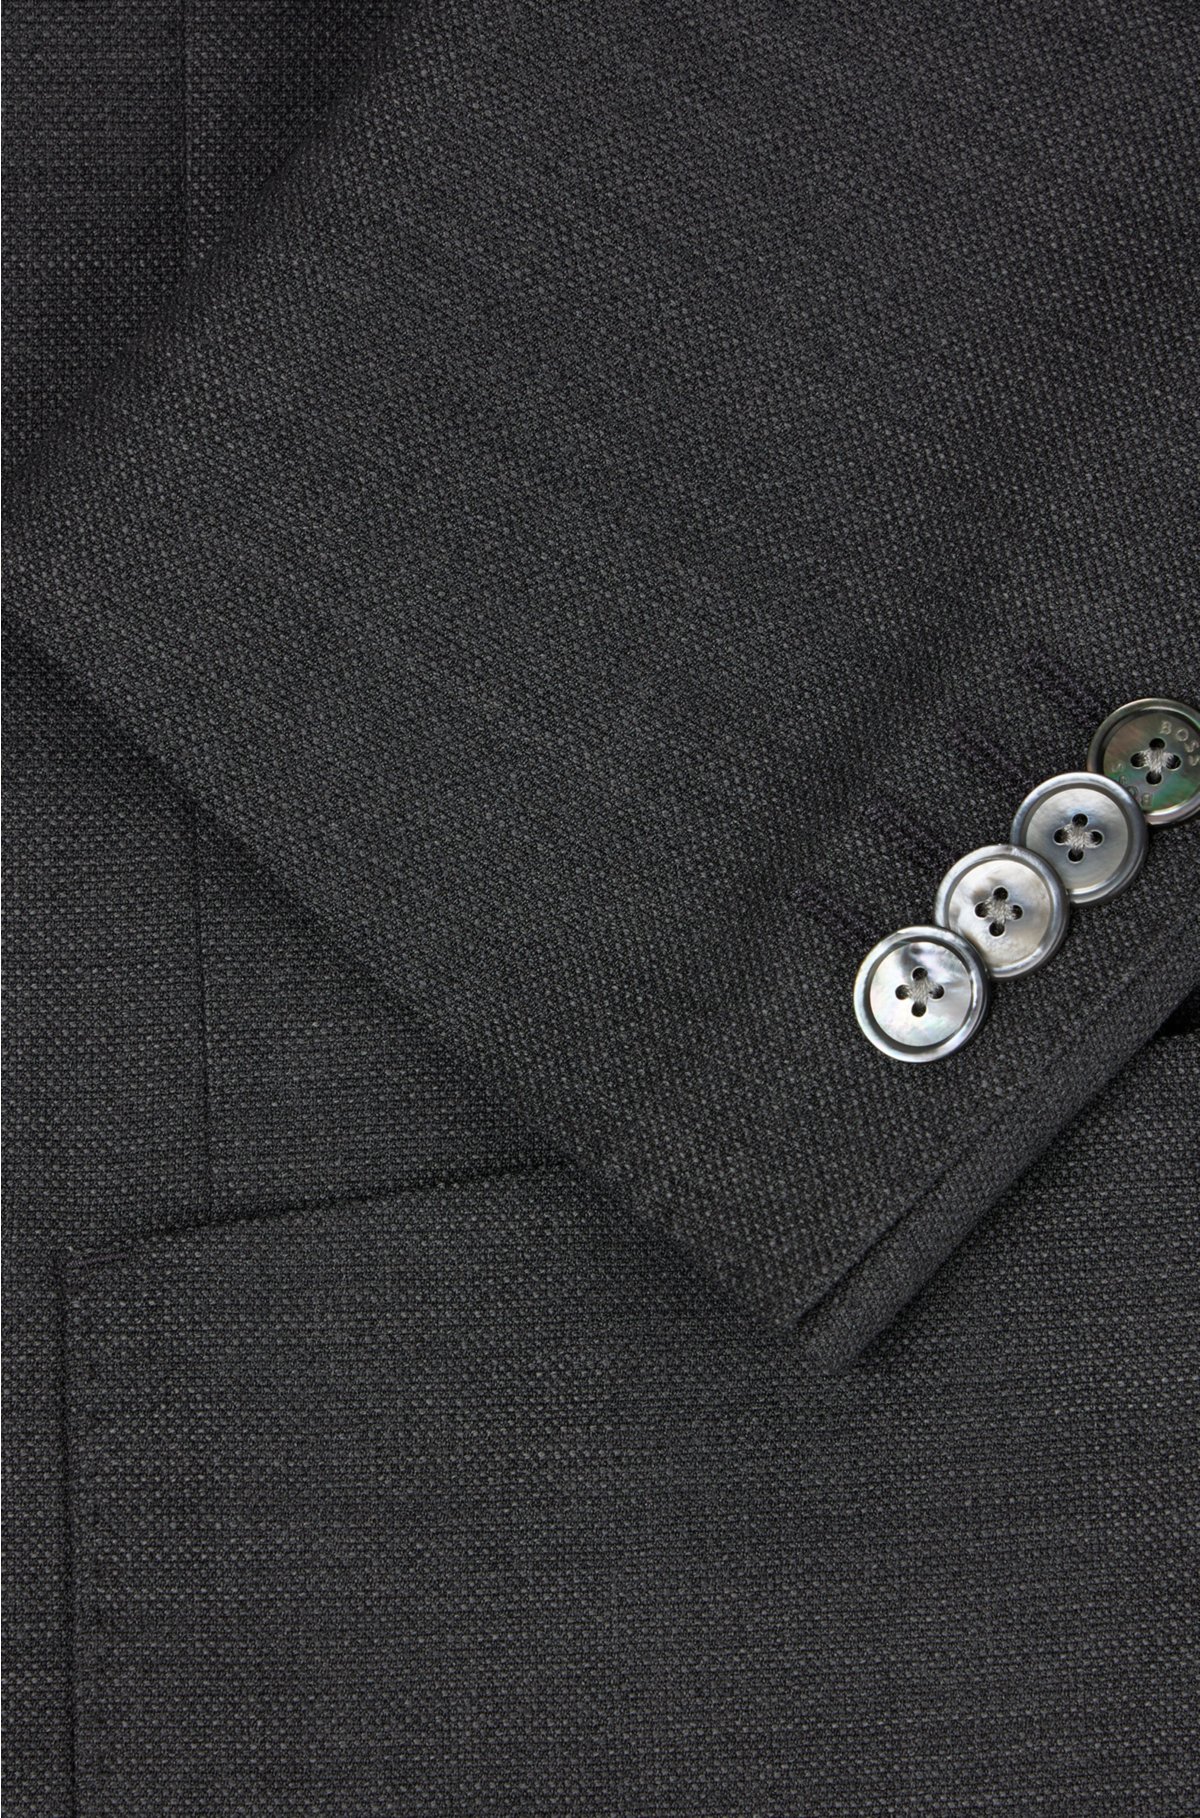 Black & Dark Gray Viscose Stripes Fabric Material Suit Jacket Ties Bags  Lining